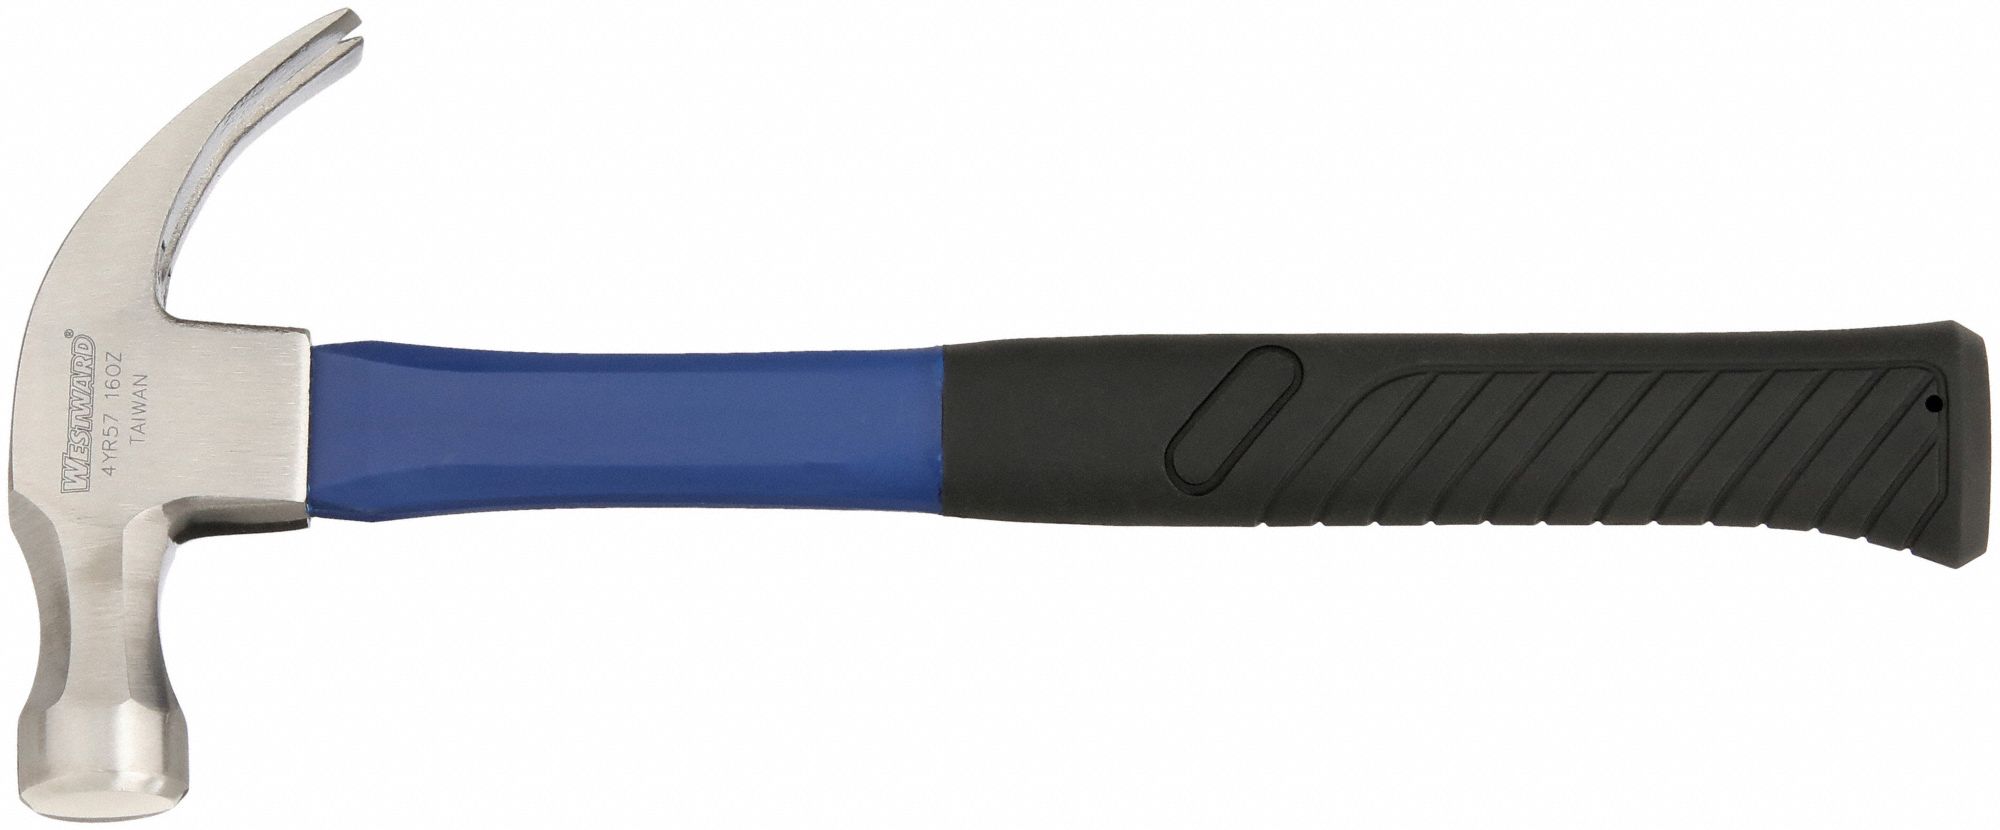 Steel, Textured Grip, Curved Claw Hammer - 4YR57